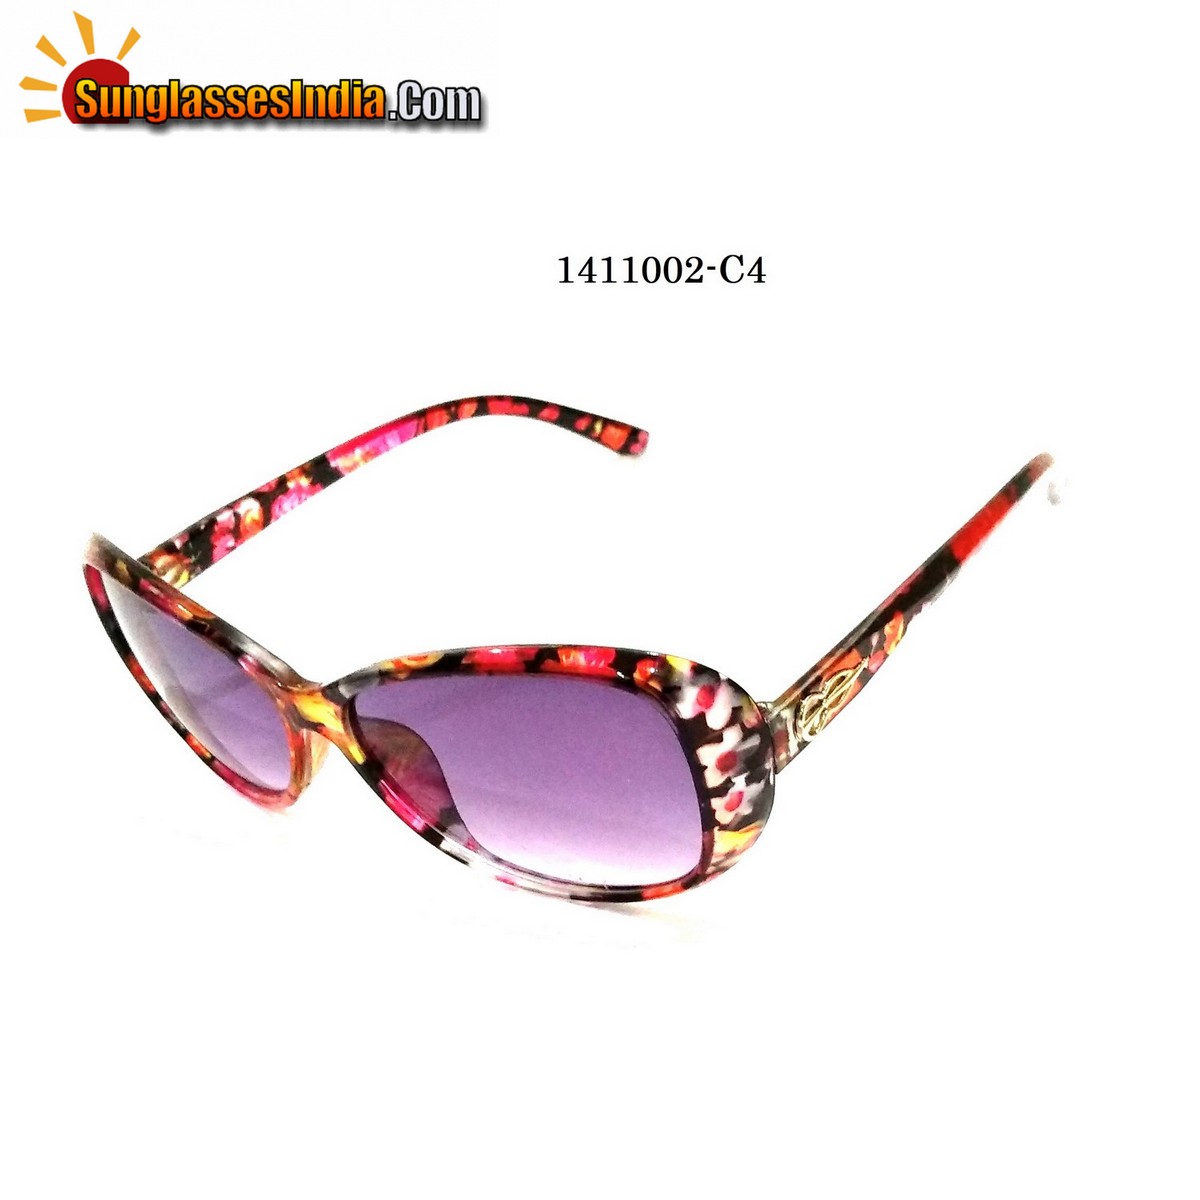 Floral Print Ladies Women Sunglasses Model 1141002C4